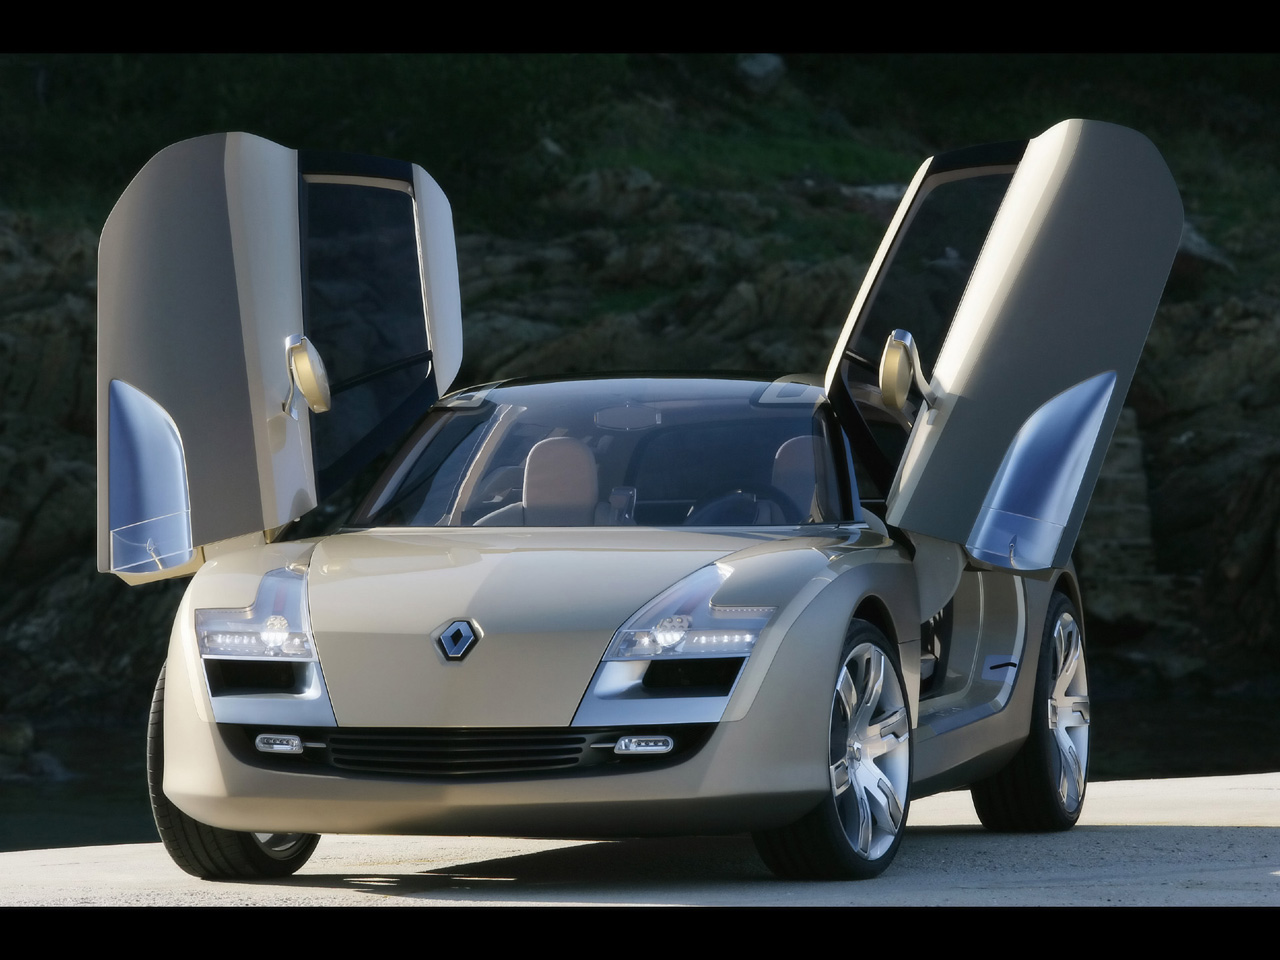 2006 Renault Altica Concept